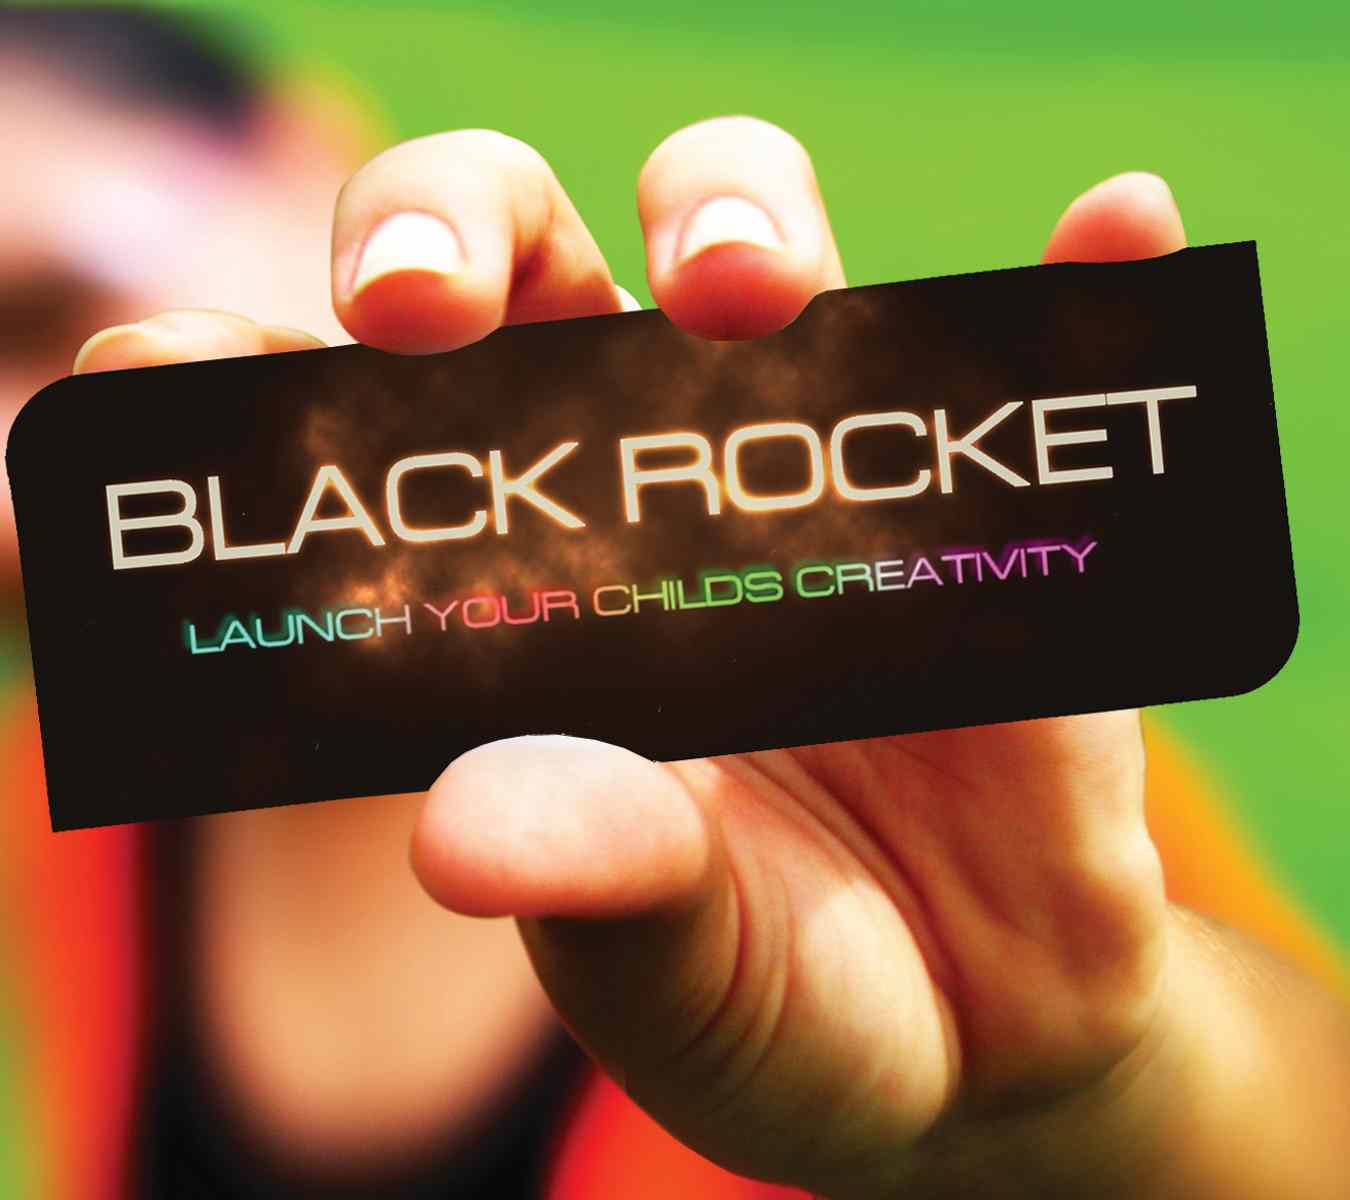 Black Rocket Launch Your Childs Creativity